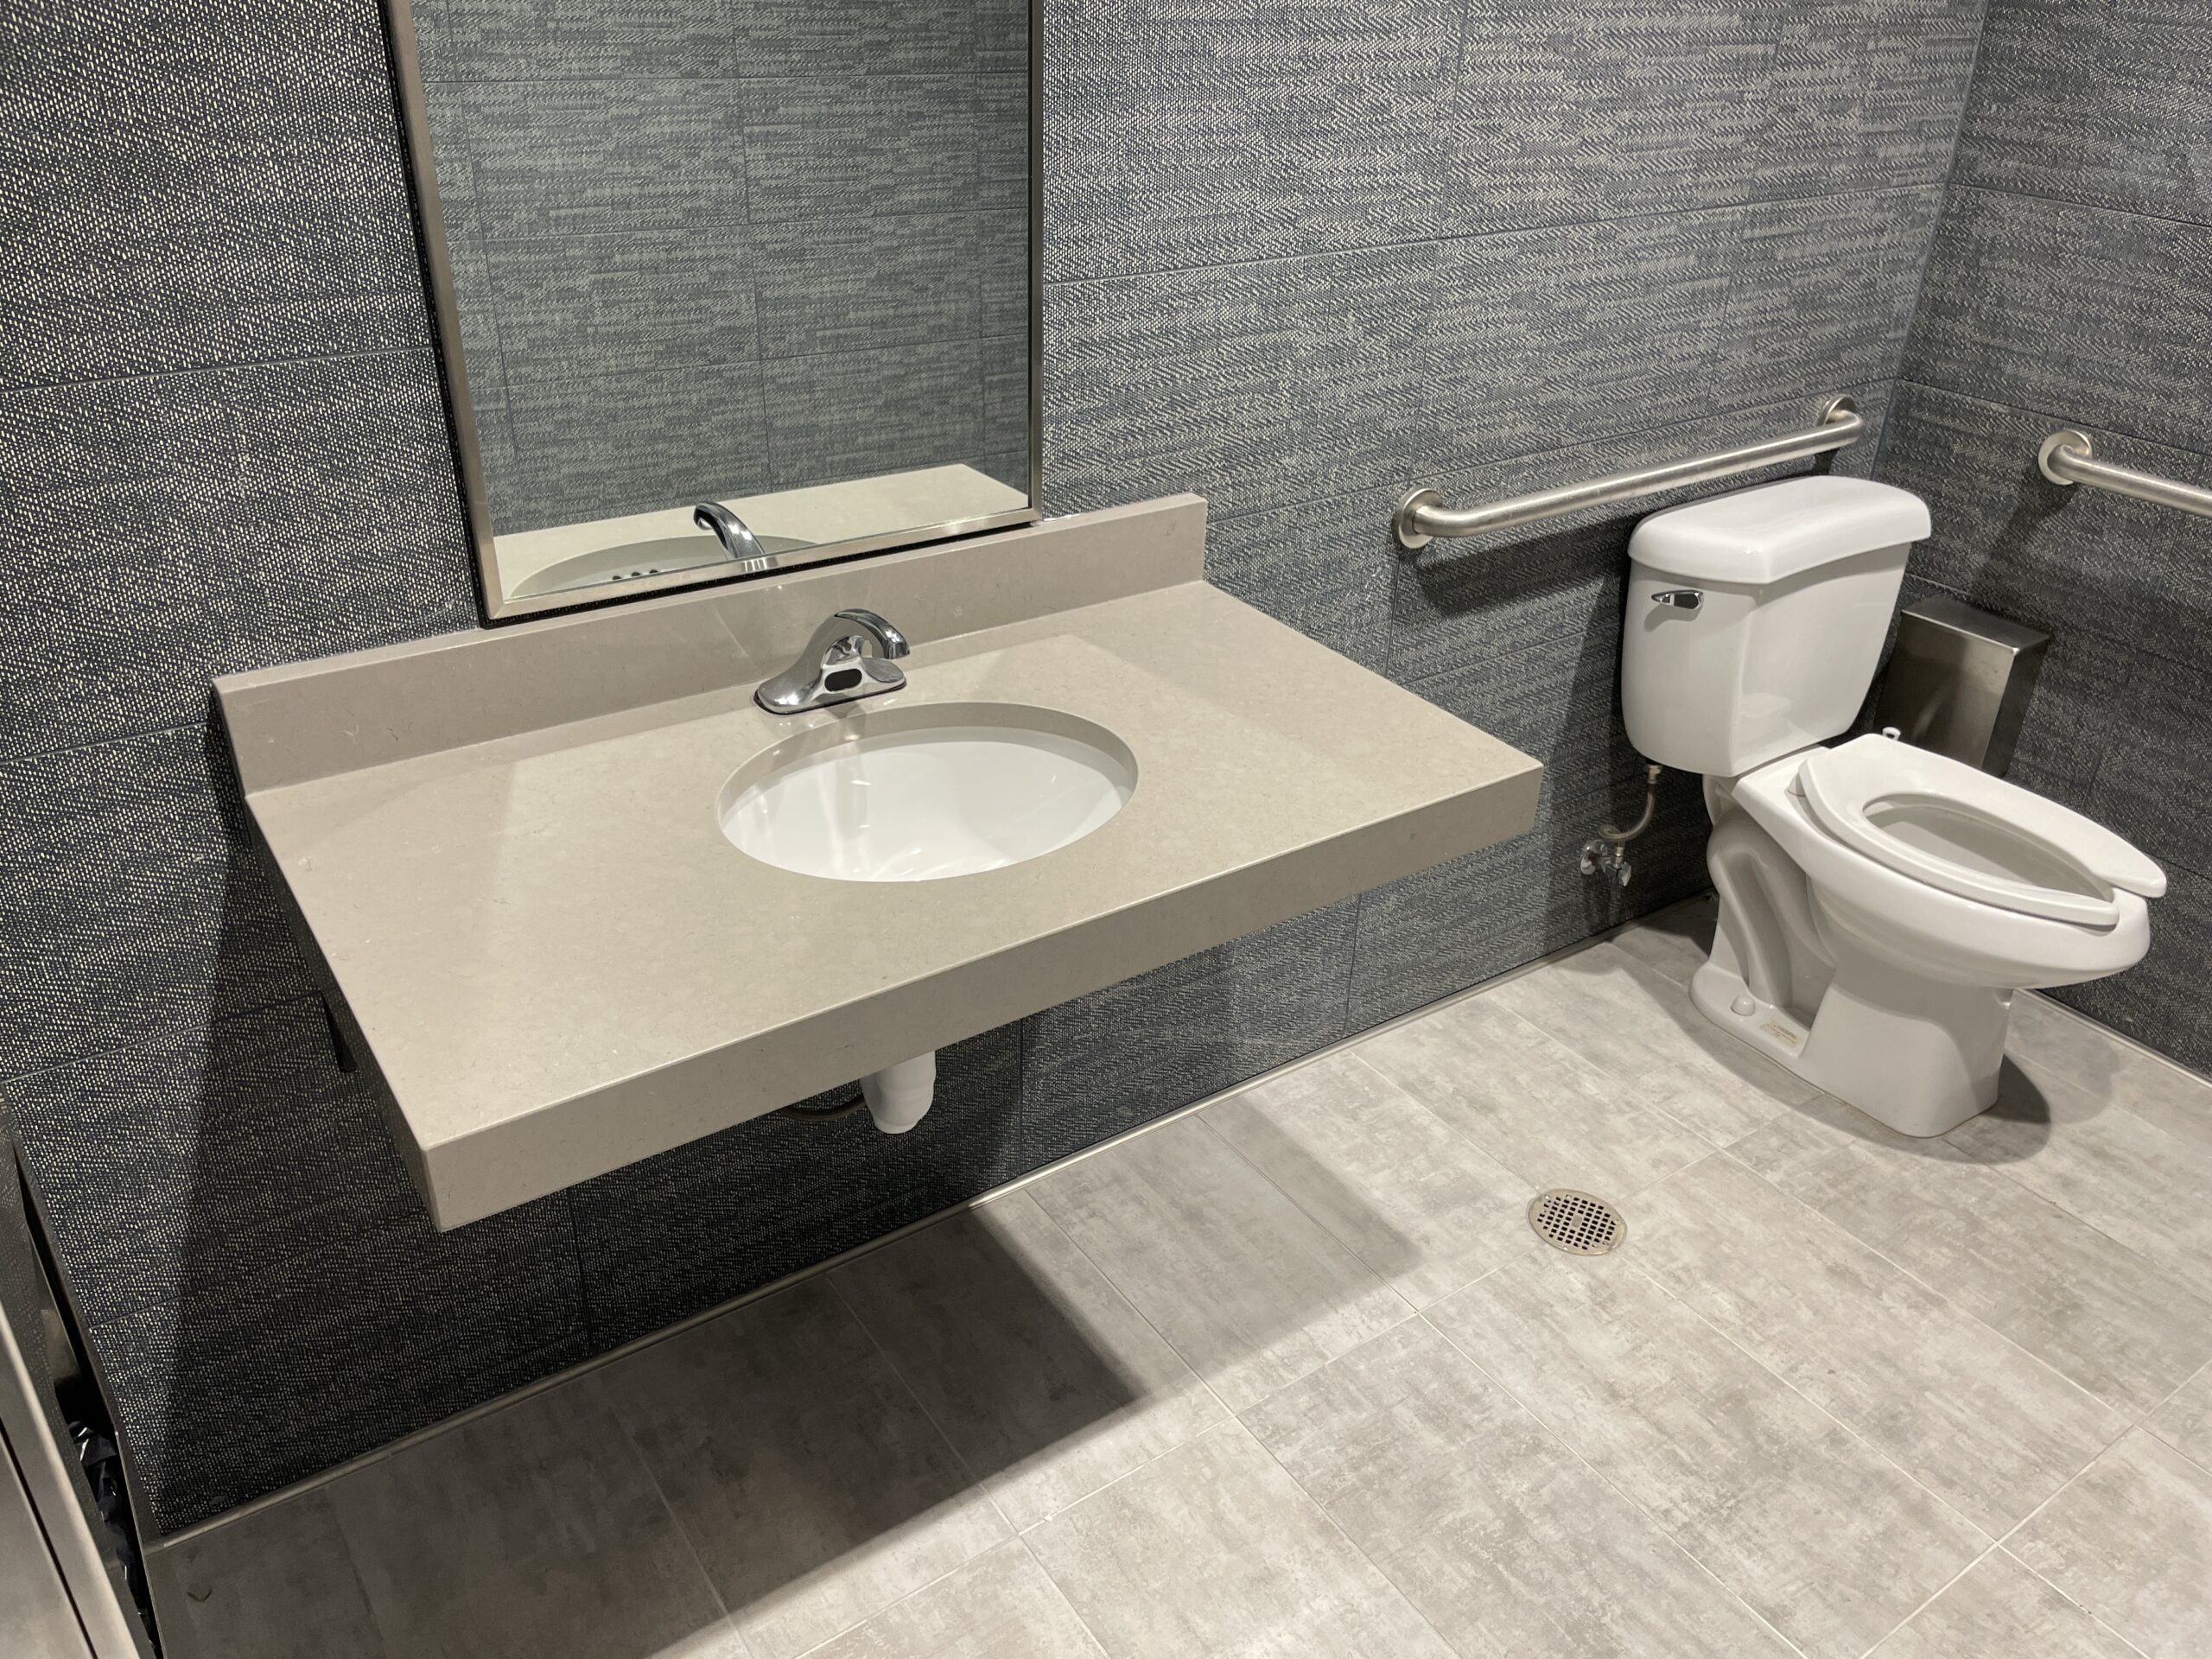 Custom home design firm for bathroom Renovation - DDCA Architects